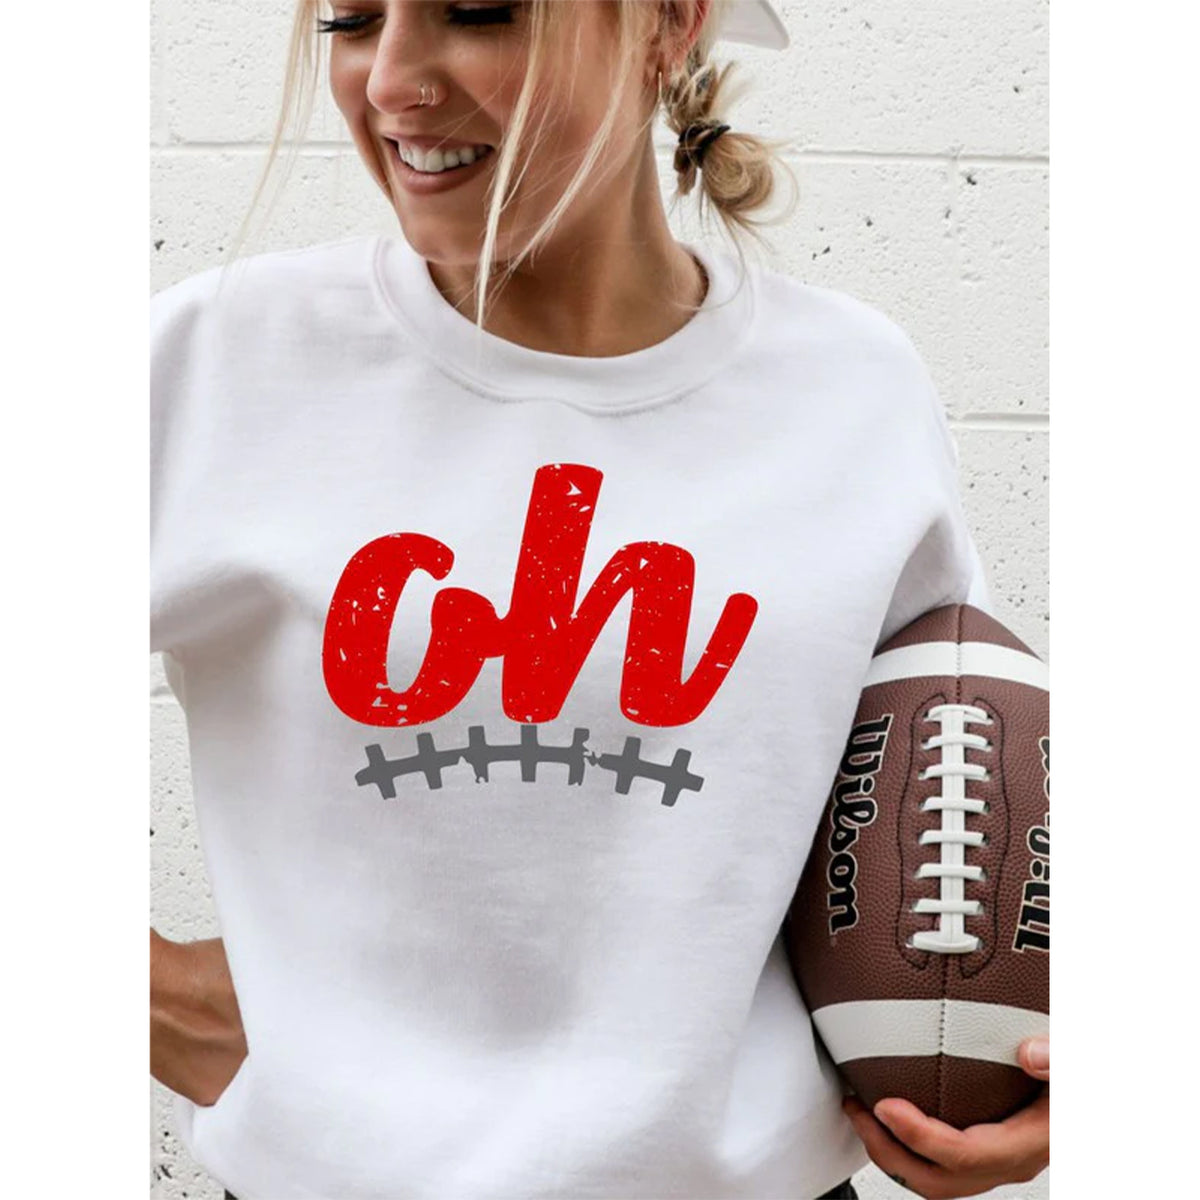 Ohio Football Stitch Gameday Crewneck Sweatshirt